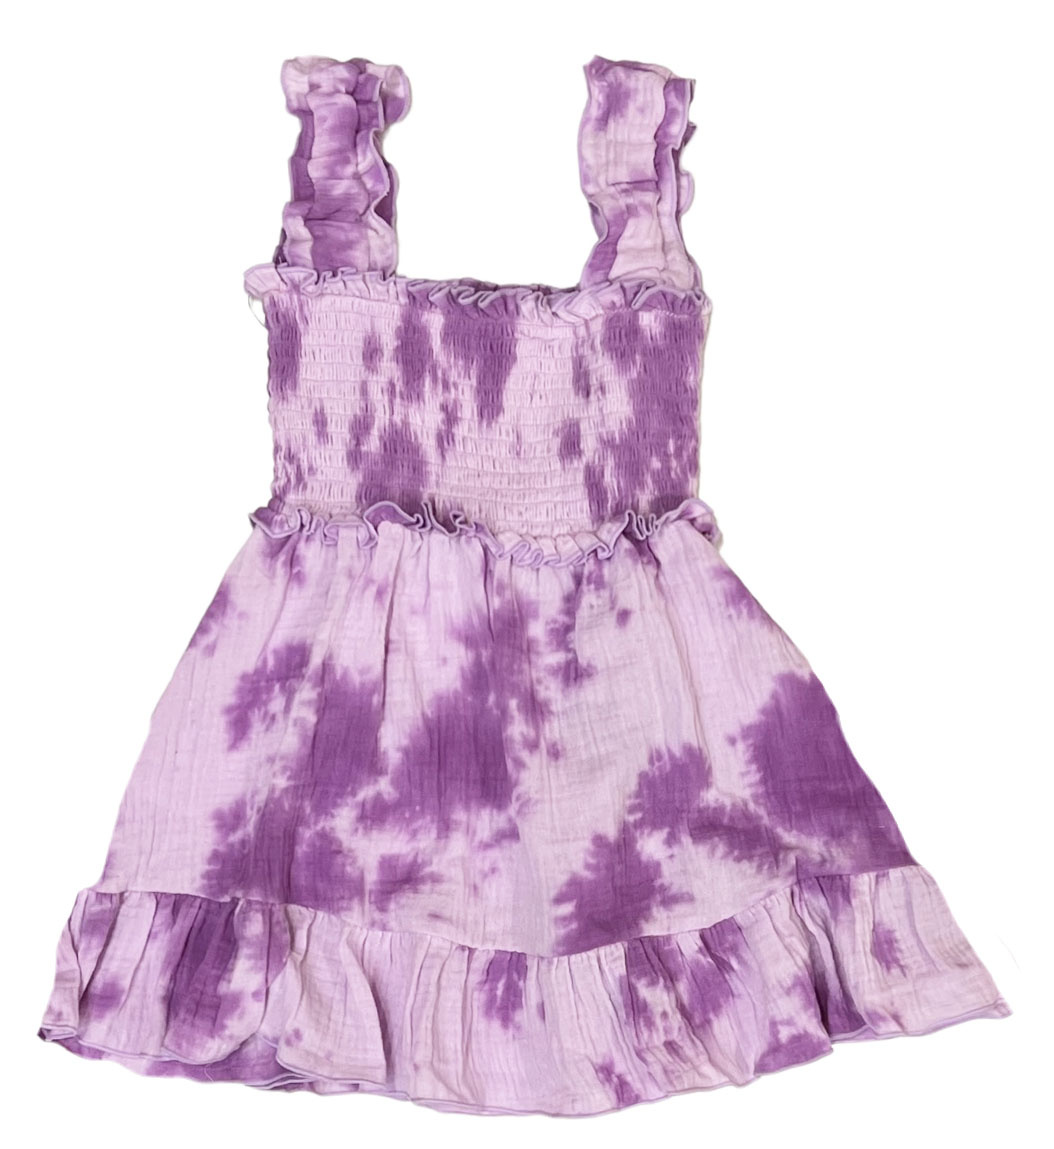 FBZ Purple Smocked TD Gauze Toddler Dress